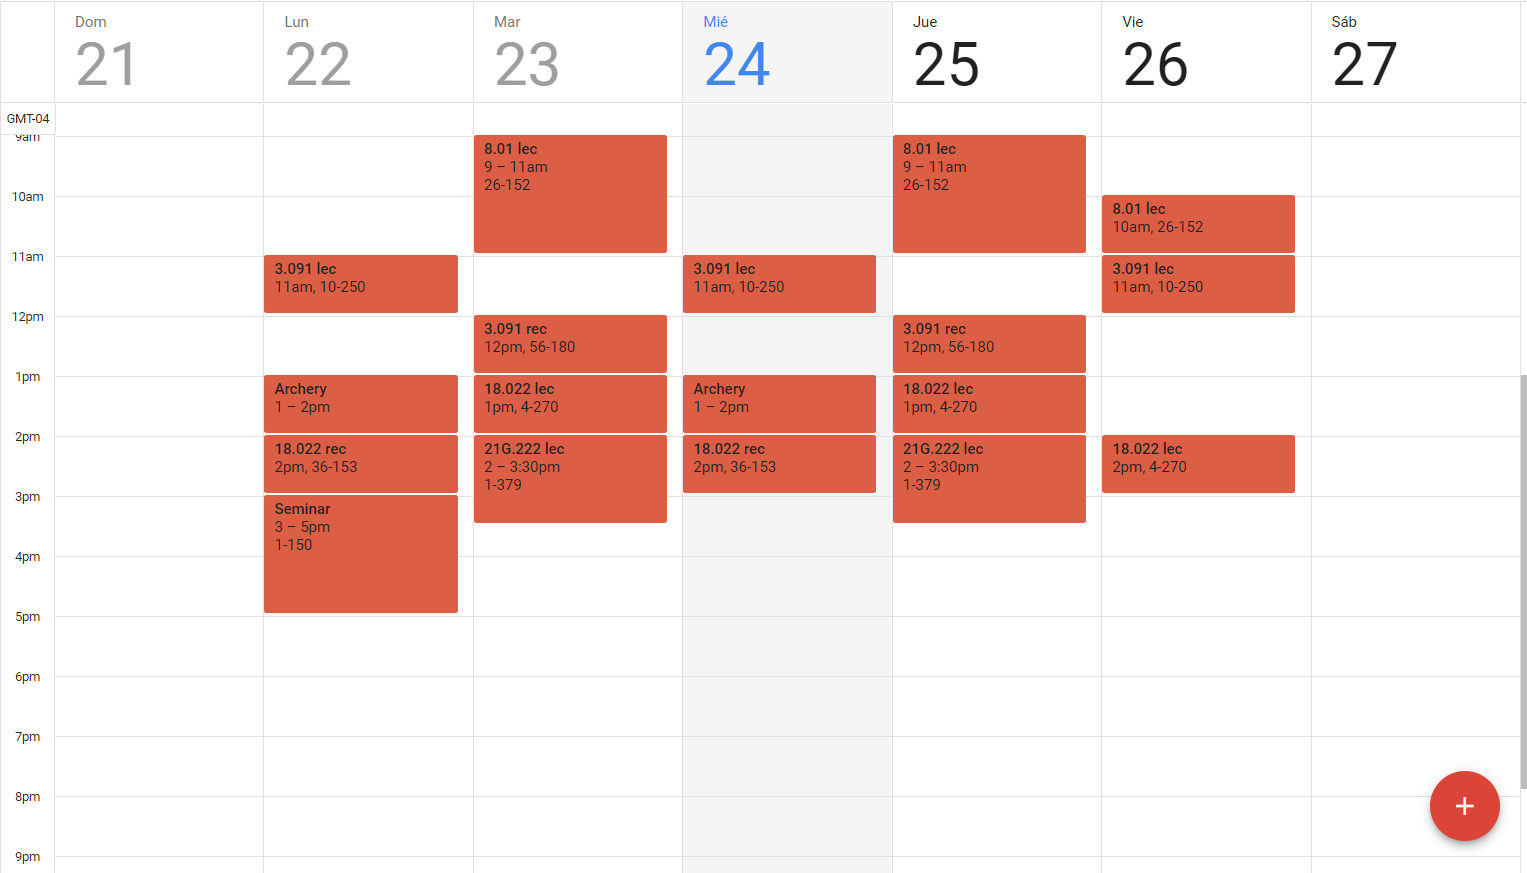 Schedule for Mafia.PNG